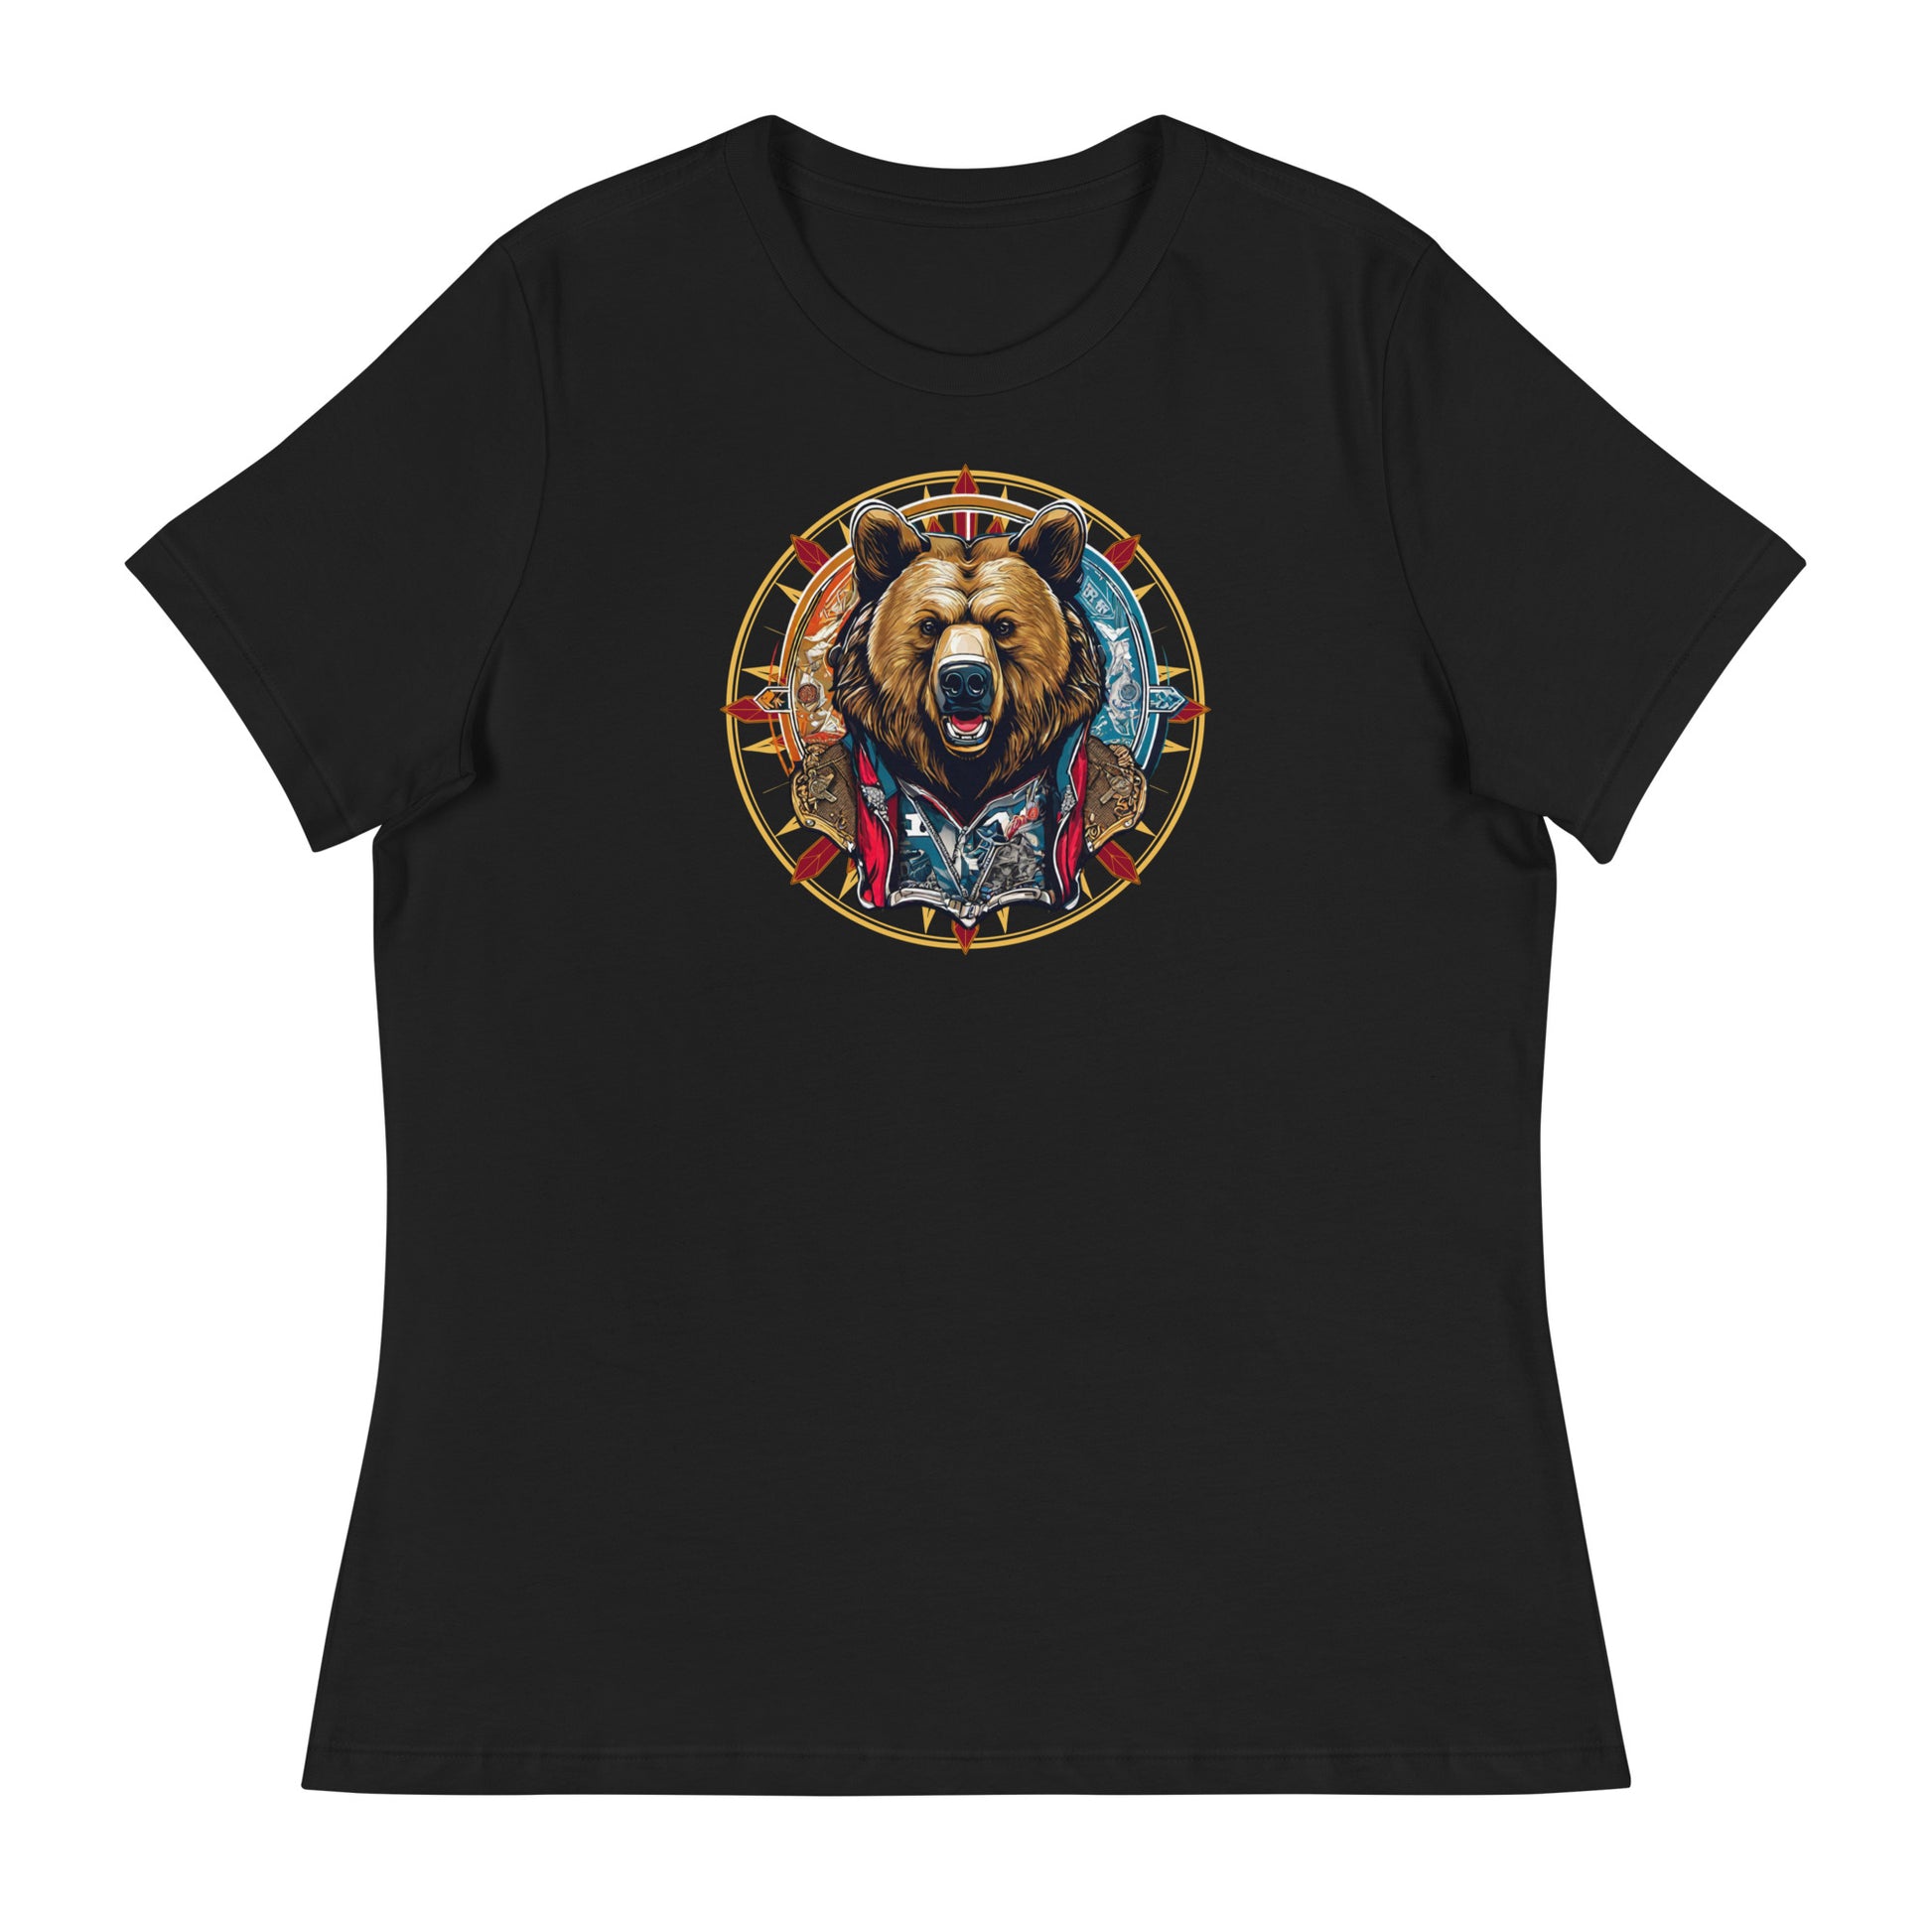 Bear Emblem Women's Graphic T-Shirt Black